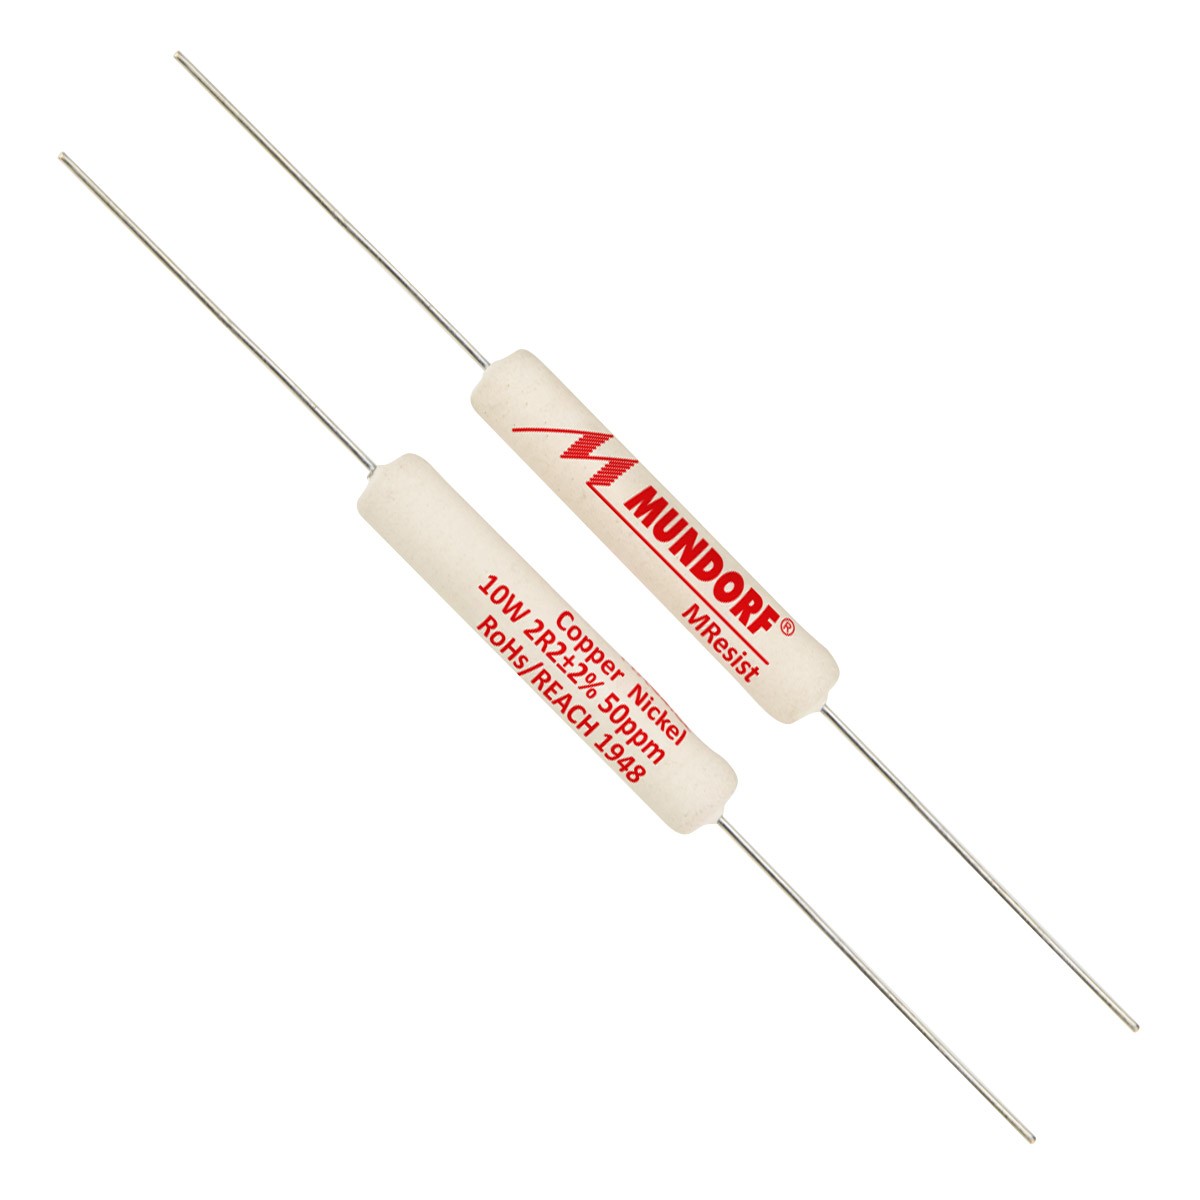 MUNDORF MRESIST CLASSIC Resistor 10W 8.2 Ohm